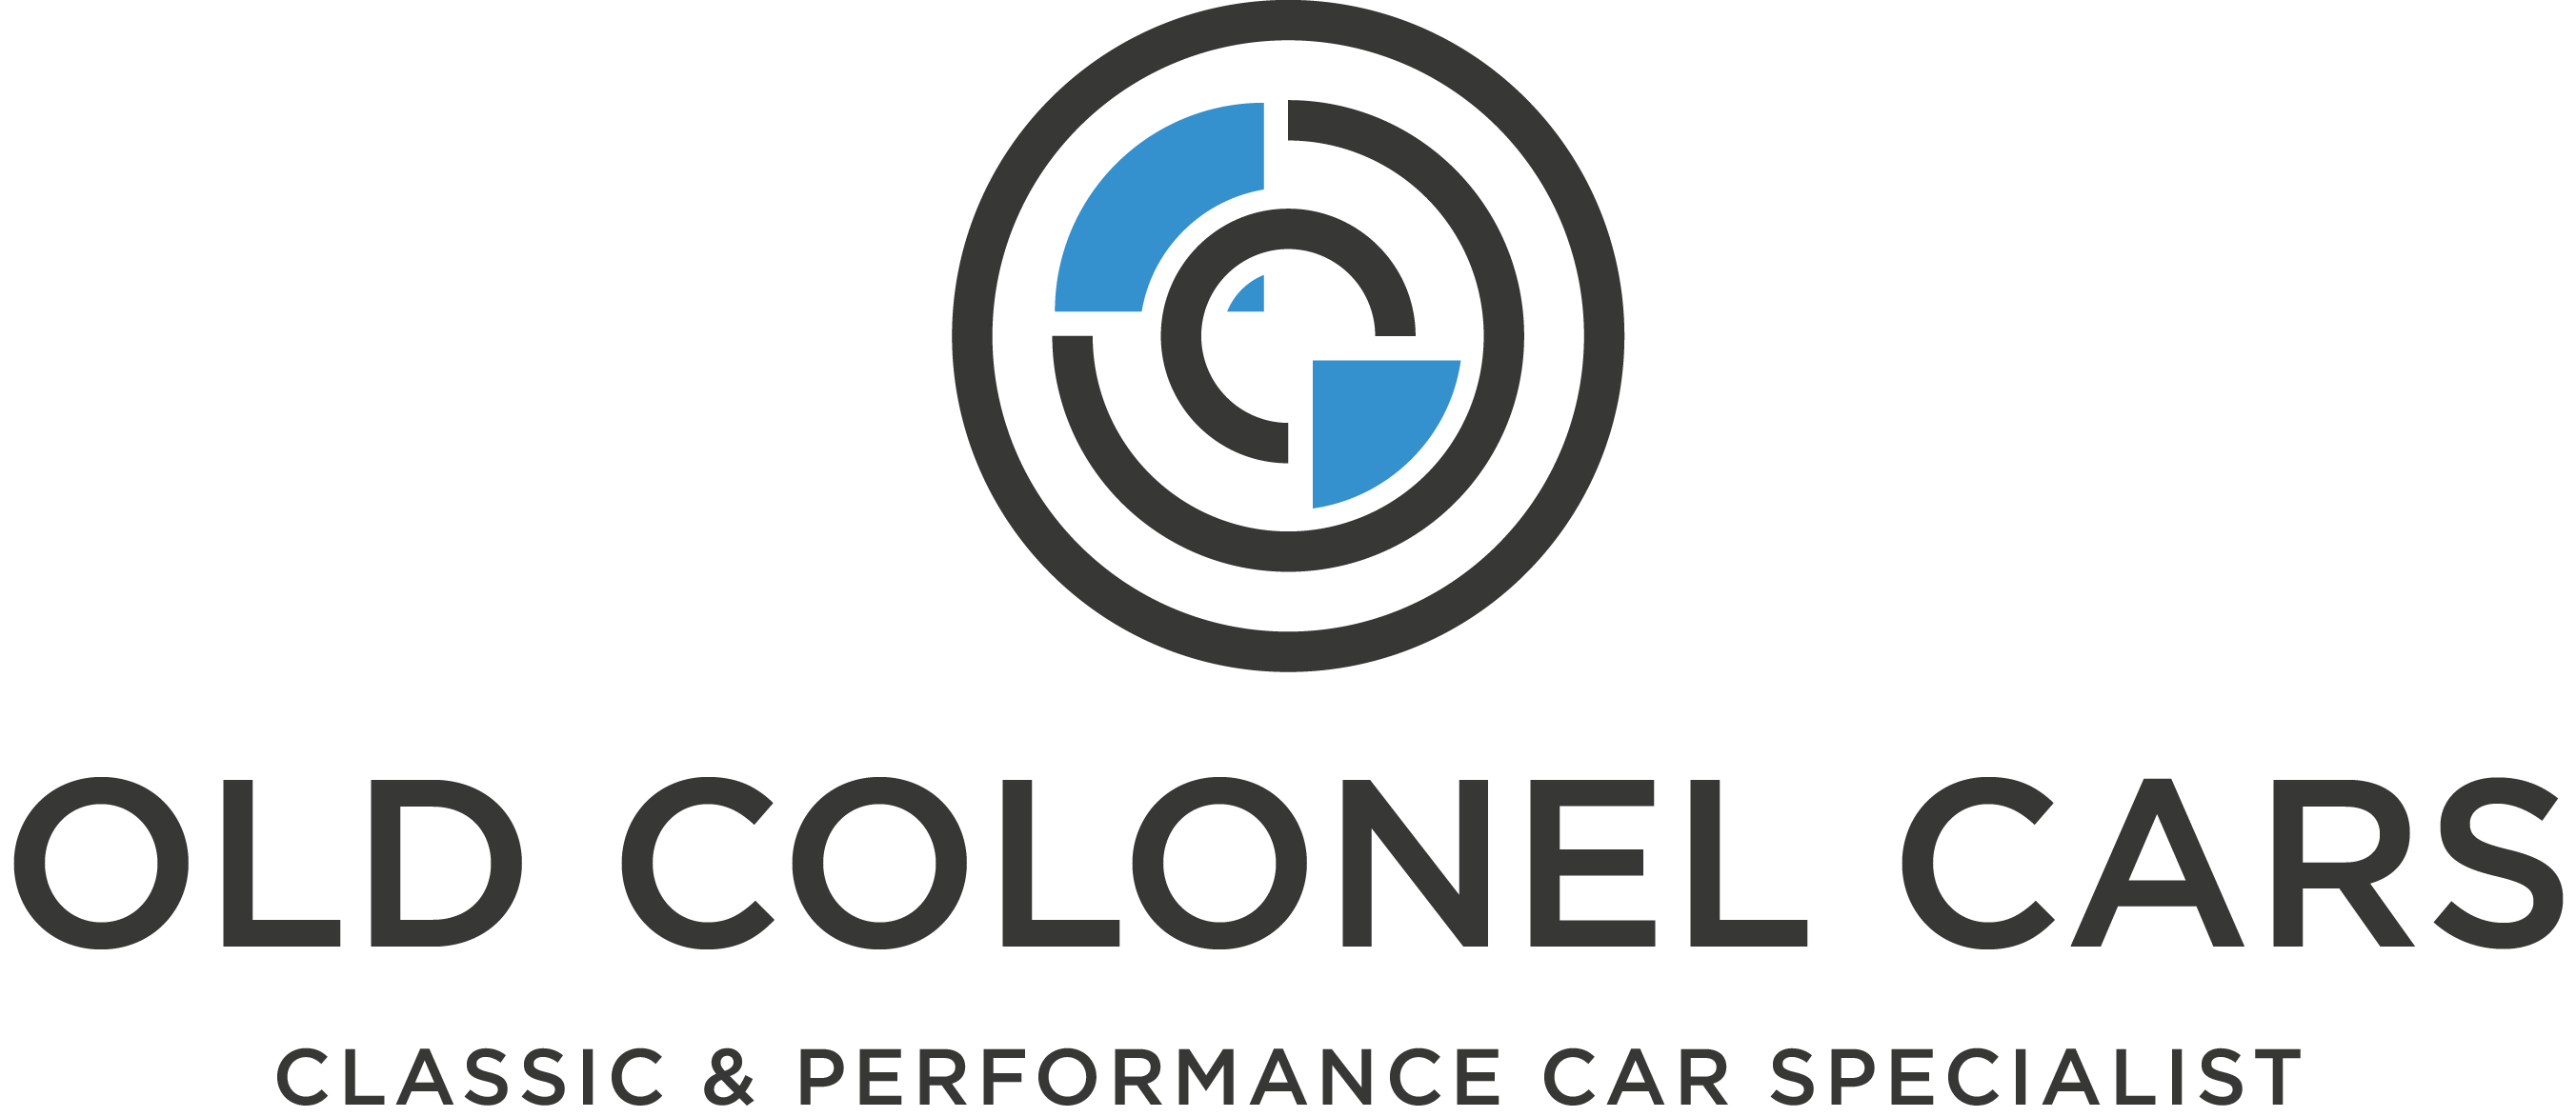 (c) Oldcolonelcars.co.uk